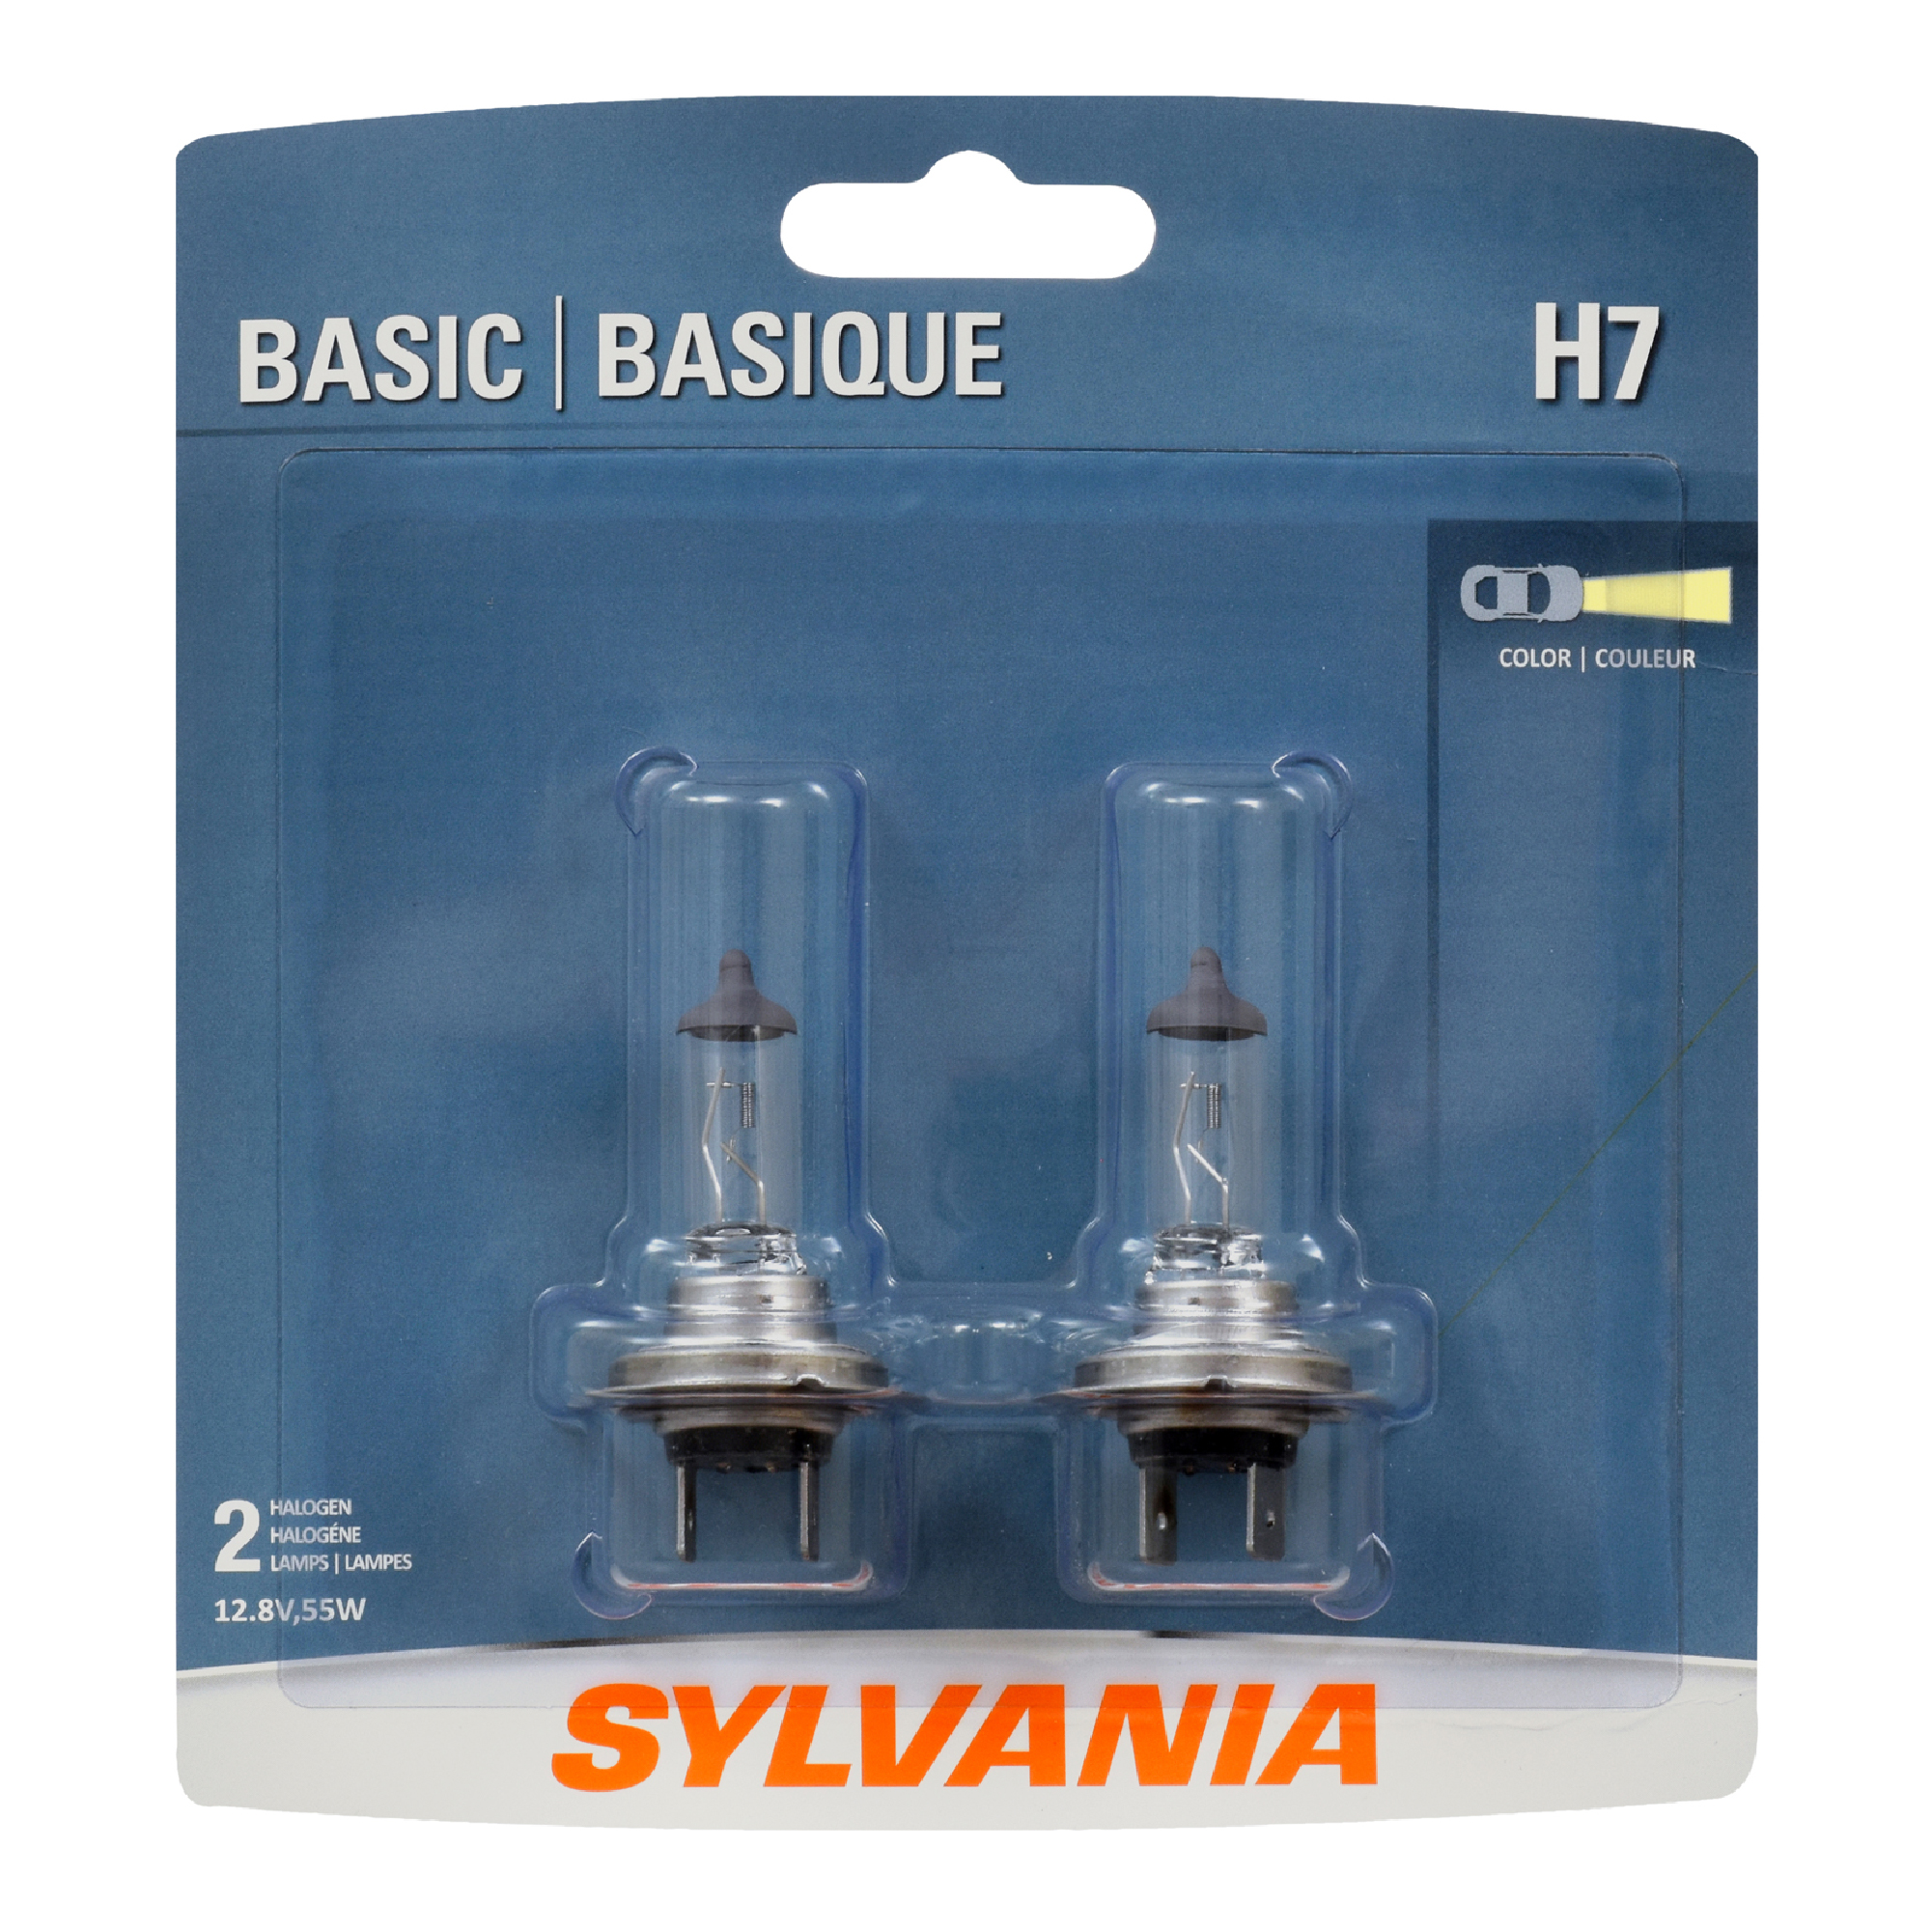 SYLVANIA H7 Basic Halogen Headlight Bulb, 2 Pack